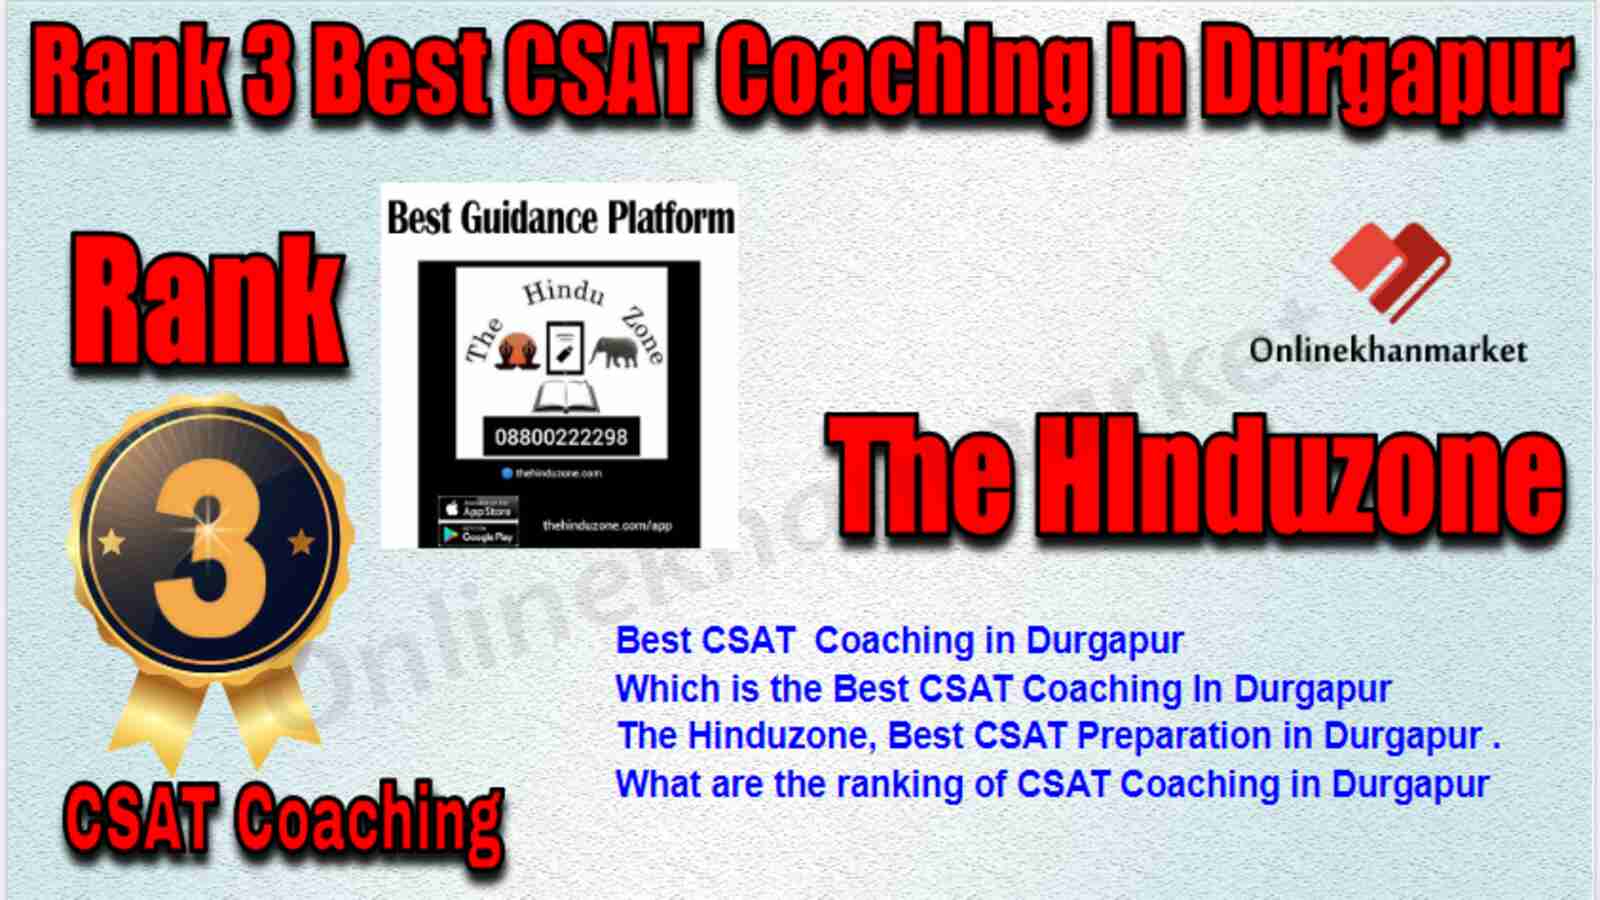 Rank 3 Best CSAT Coaching in Durgapur